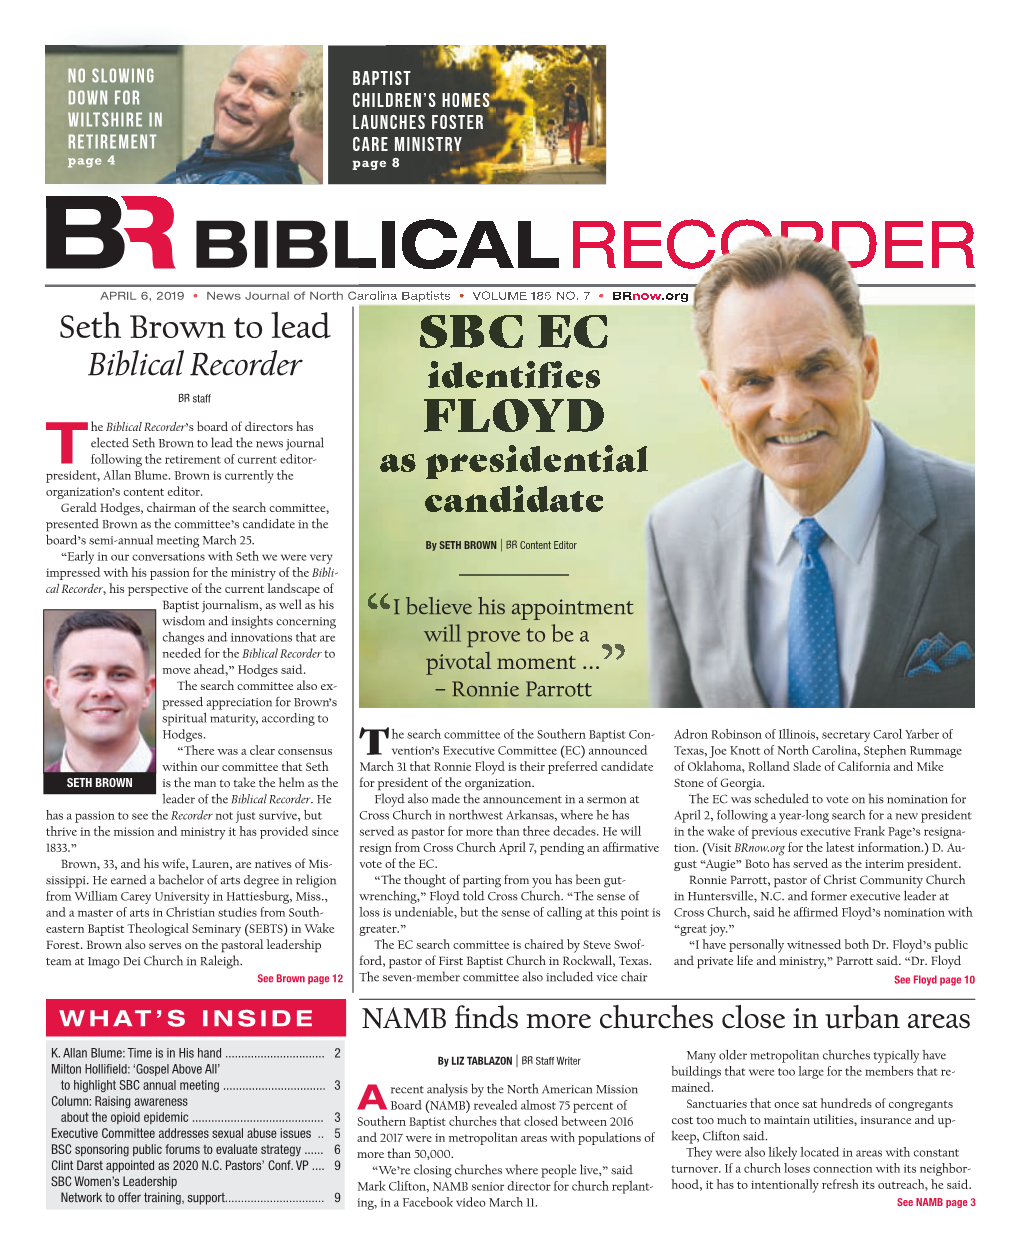 Seth Brown to Lead Biblical Recorder